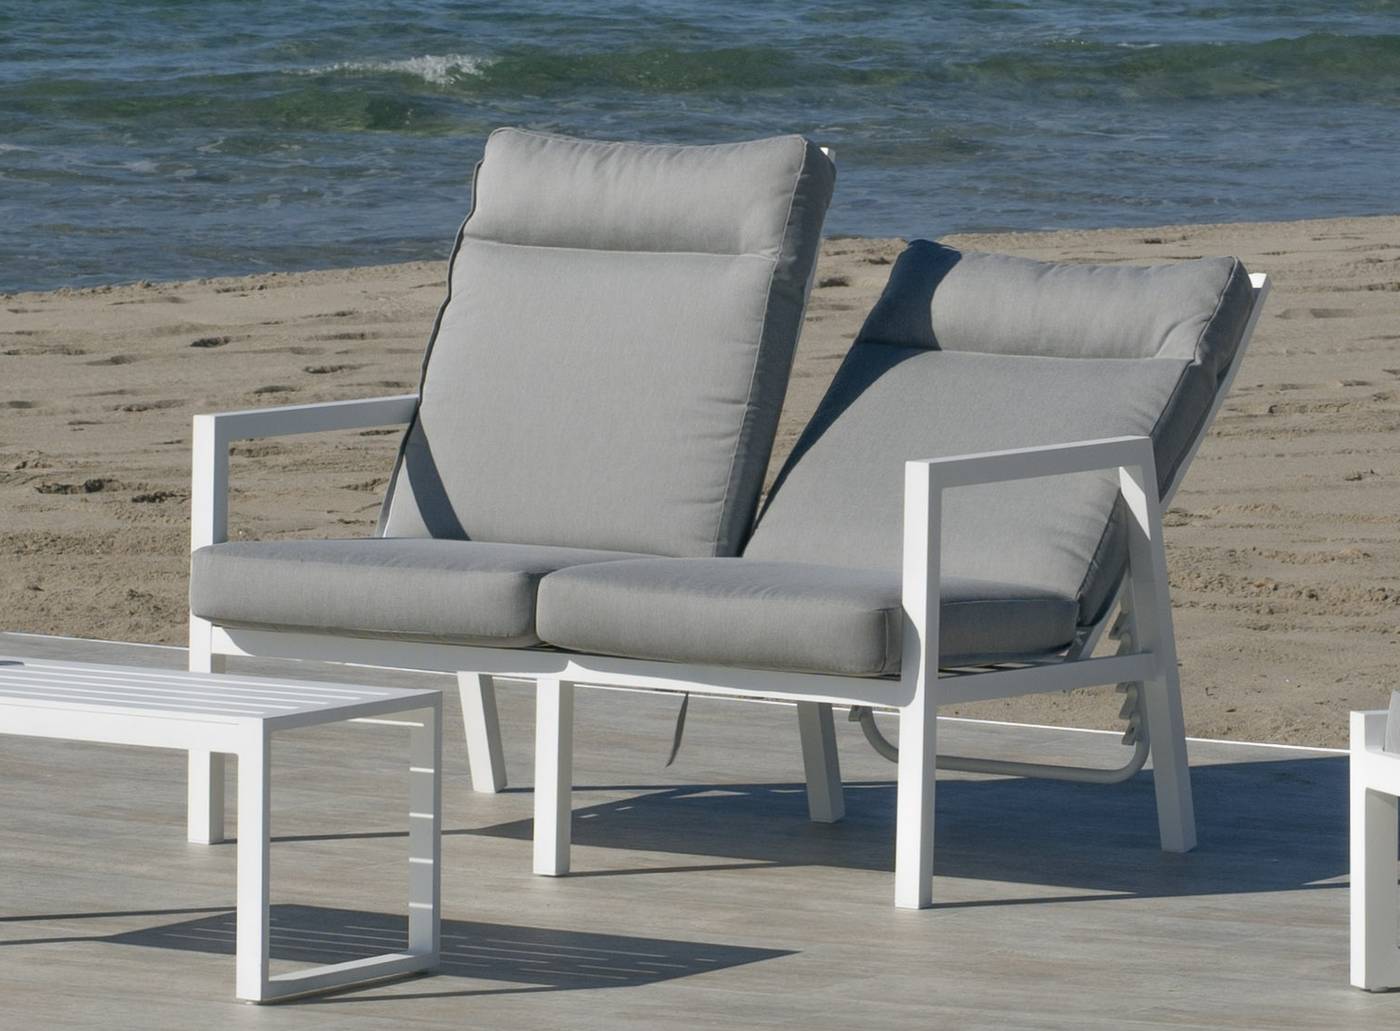 Set Aluminio Voriam-7 - Conjunto aluminio: sofá 2 plazas + 2 sillones + mesa de centro + cojines. Respaldos reclinables. Colores: blanco, plata, antracita o bronce.